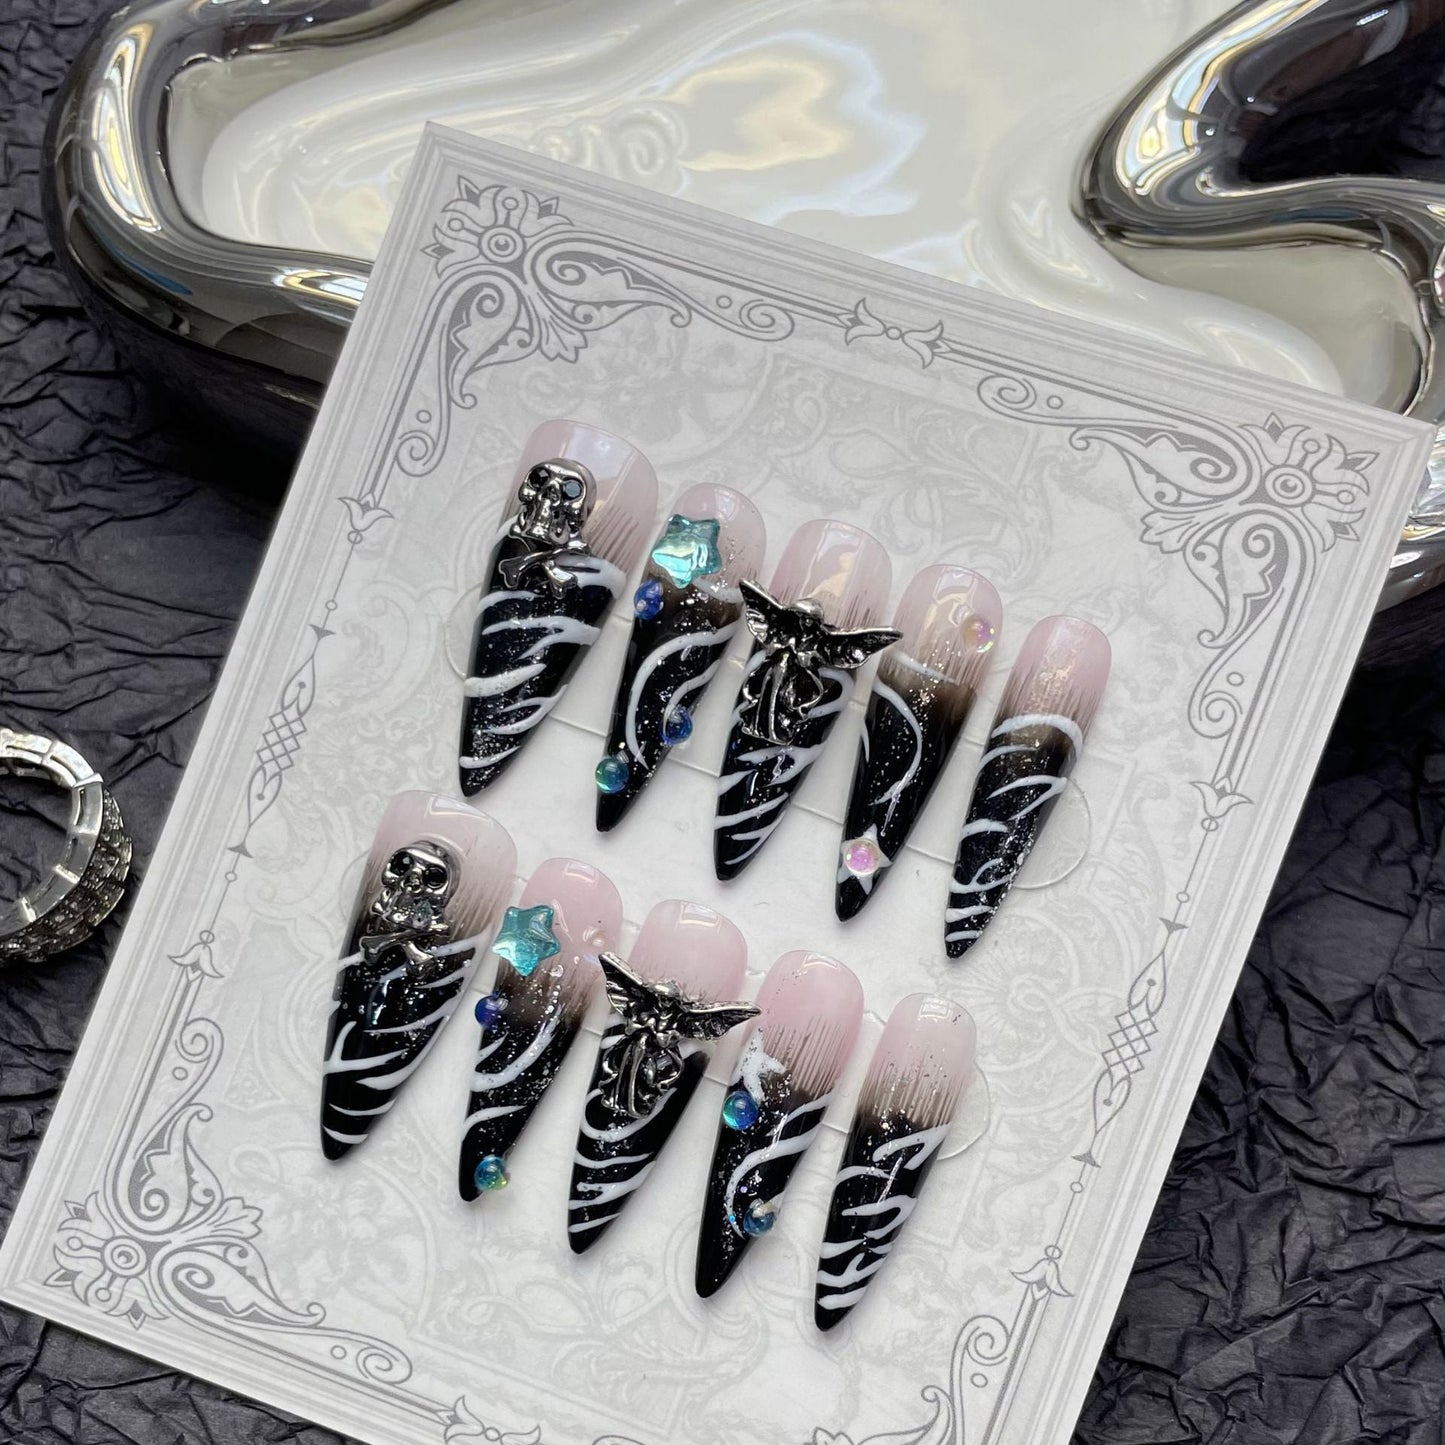 1251 Angels and demons style press on nails 100% handmade false nails black